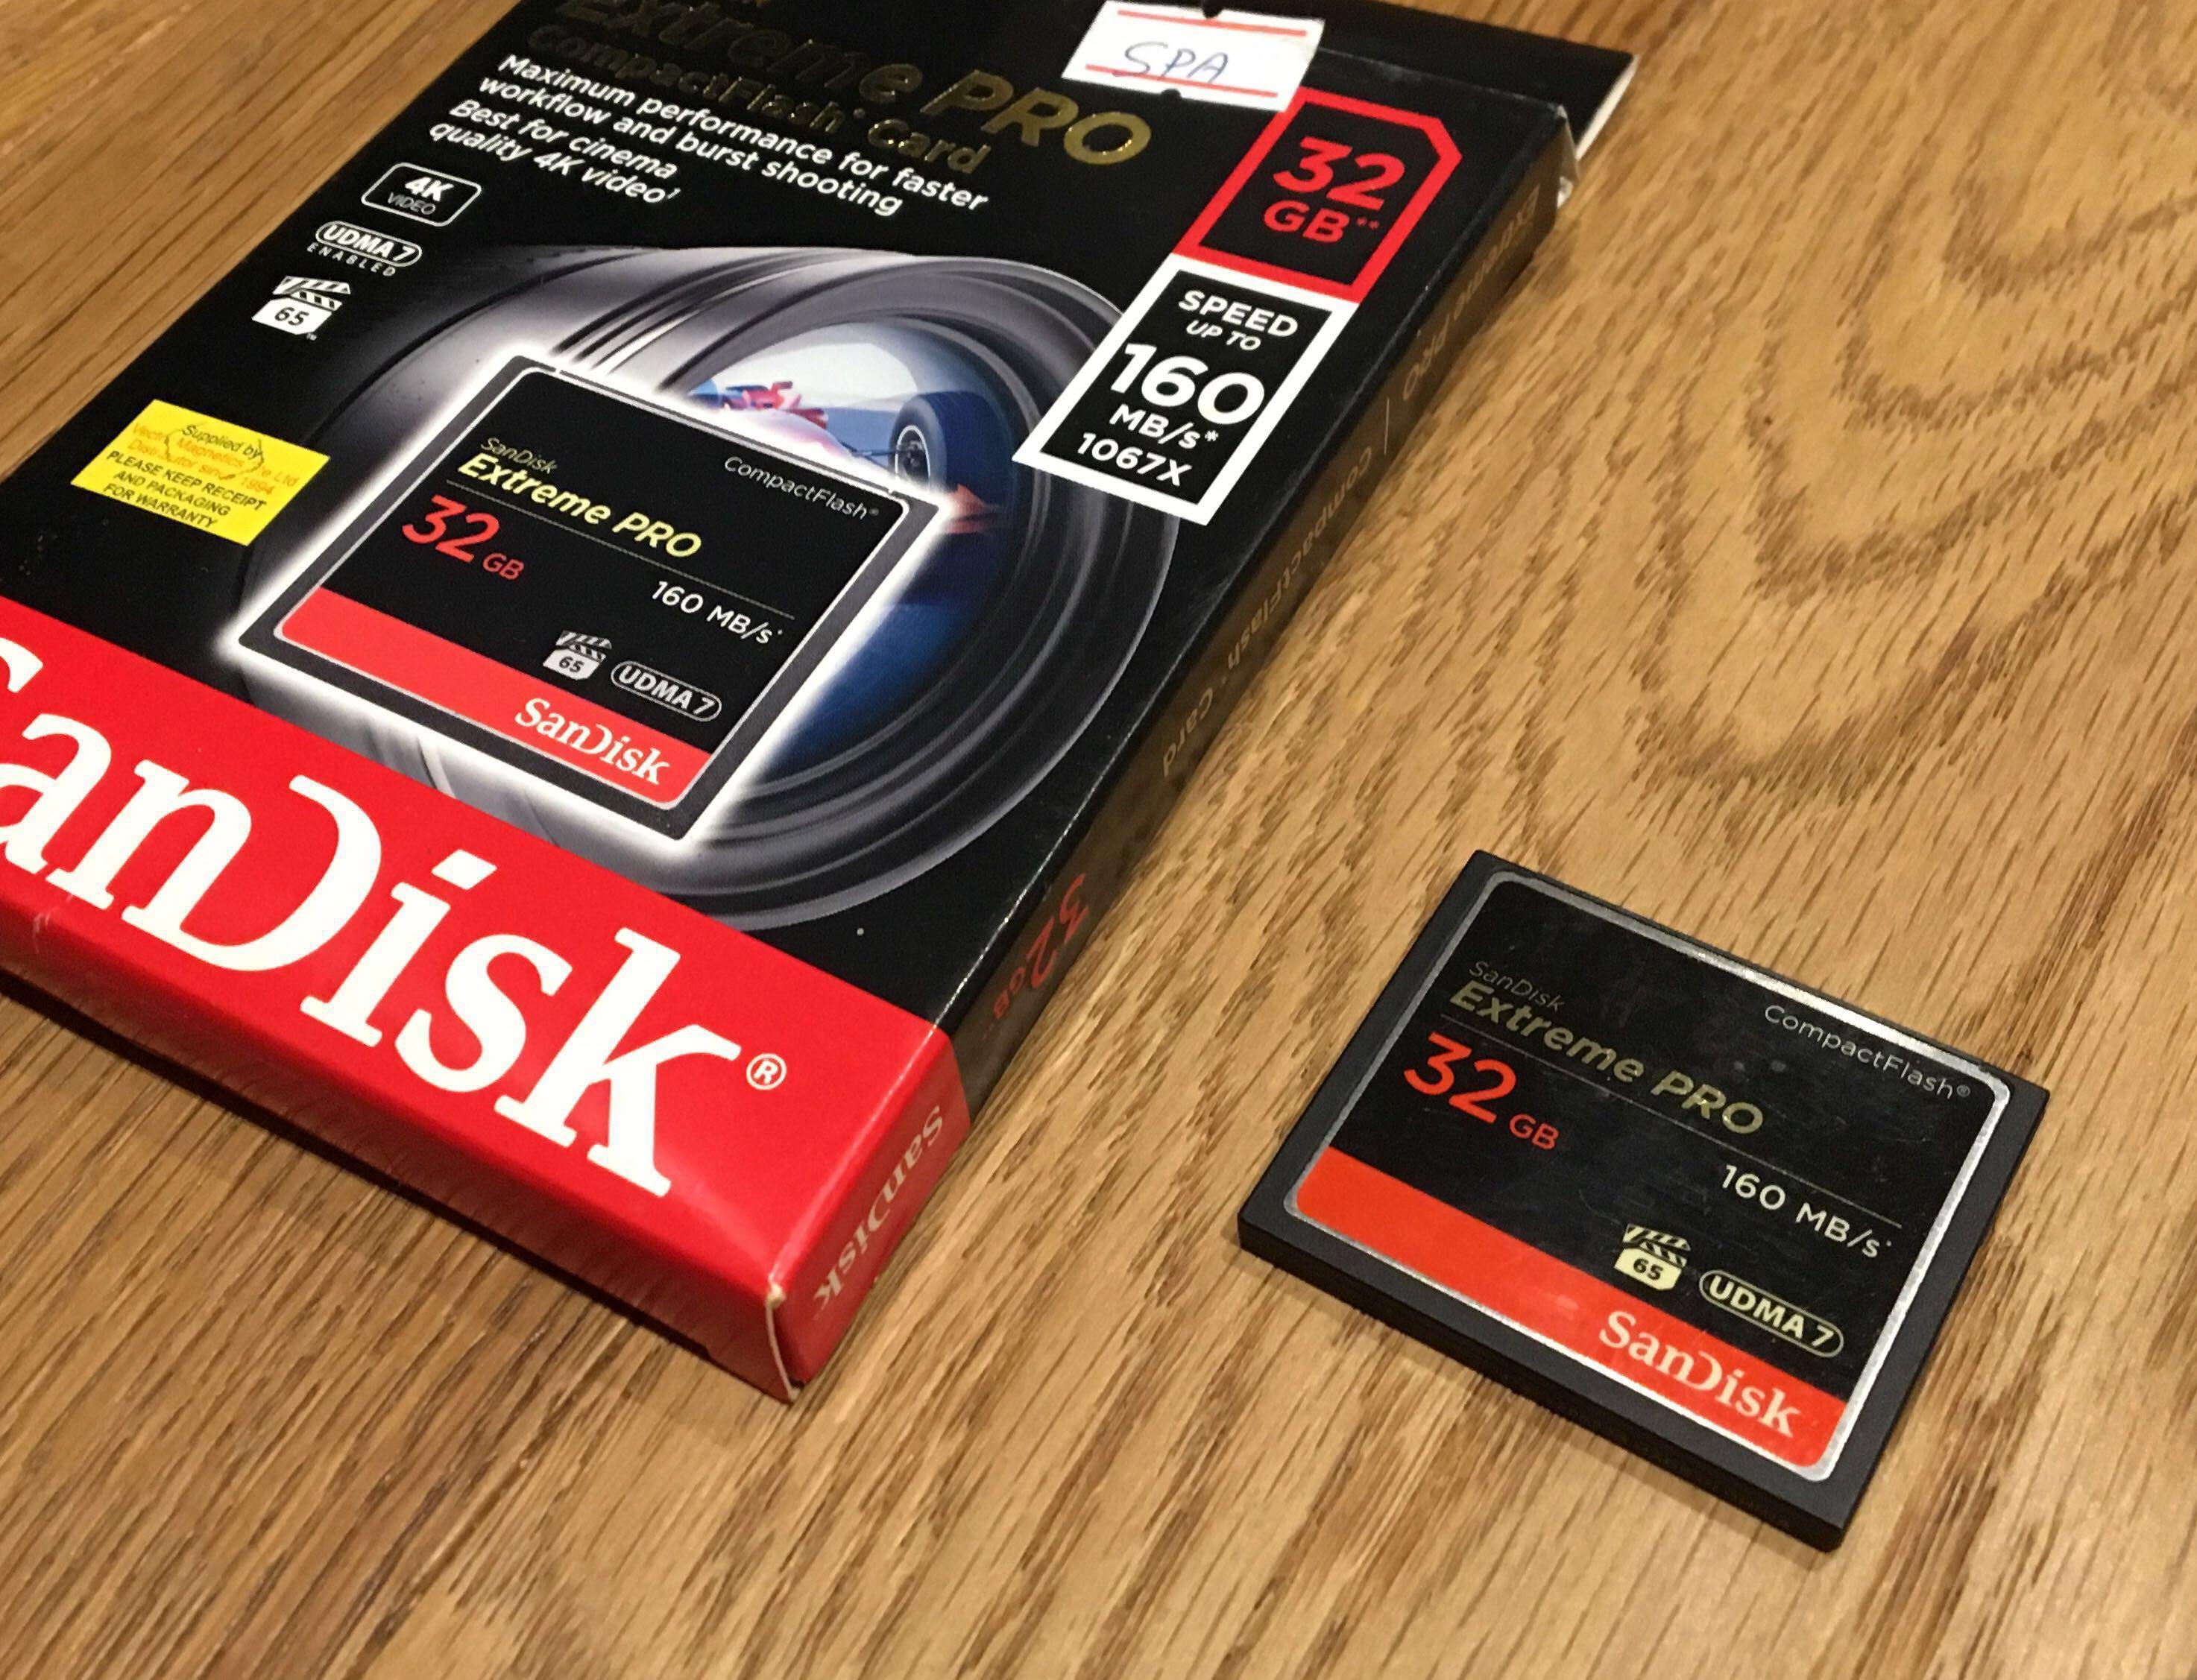 SanDisk Extreme Pro 32GB 160MB/s CF 